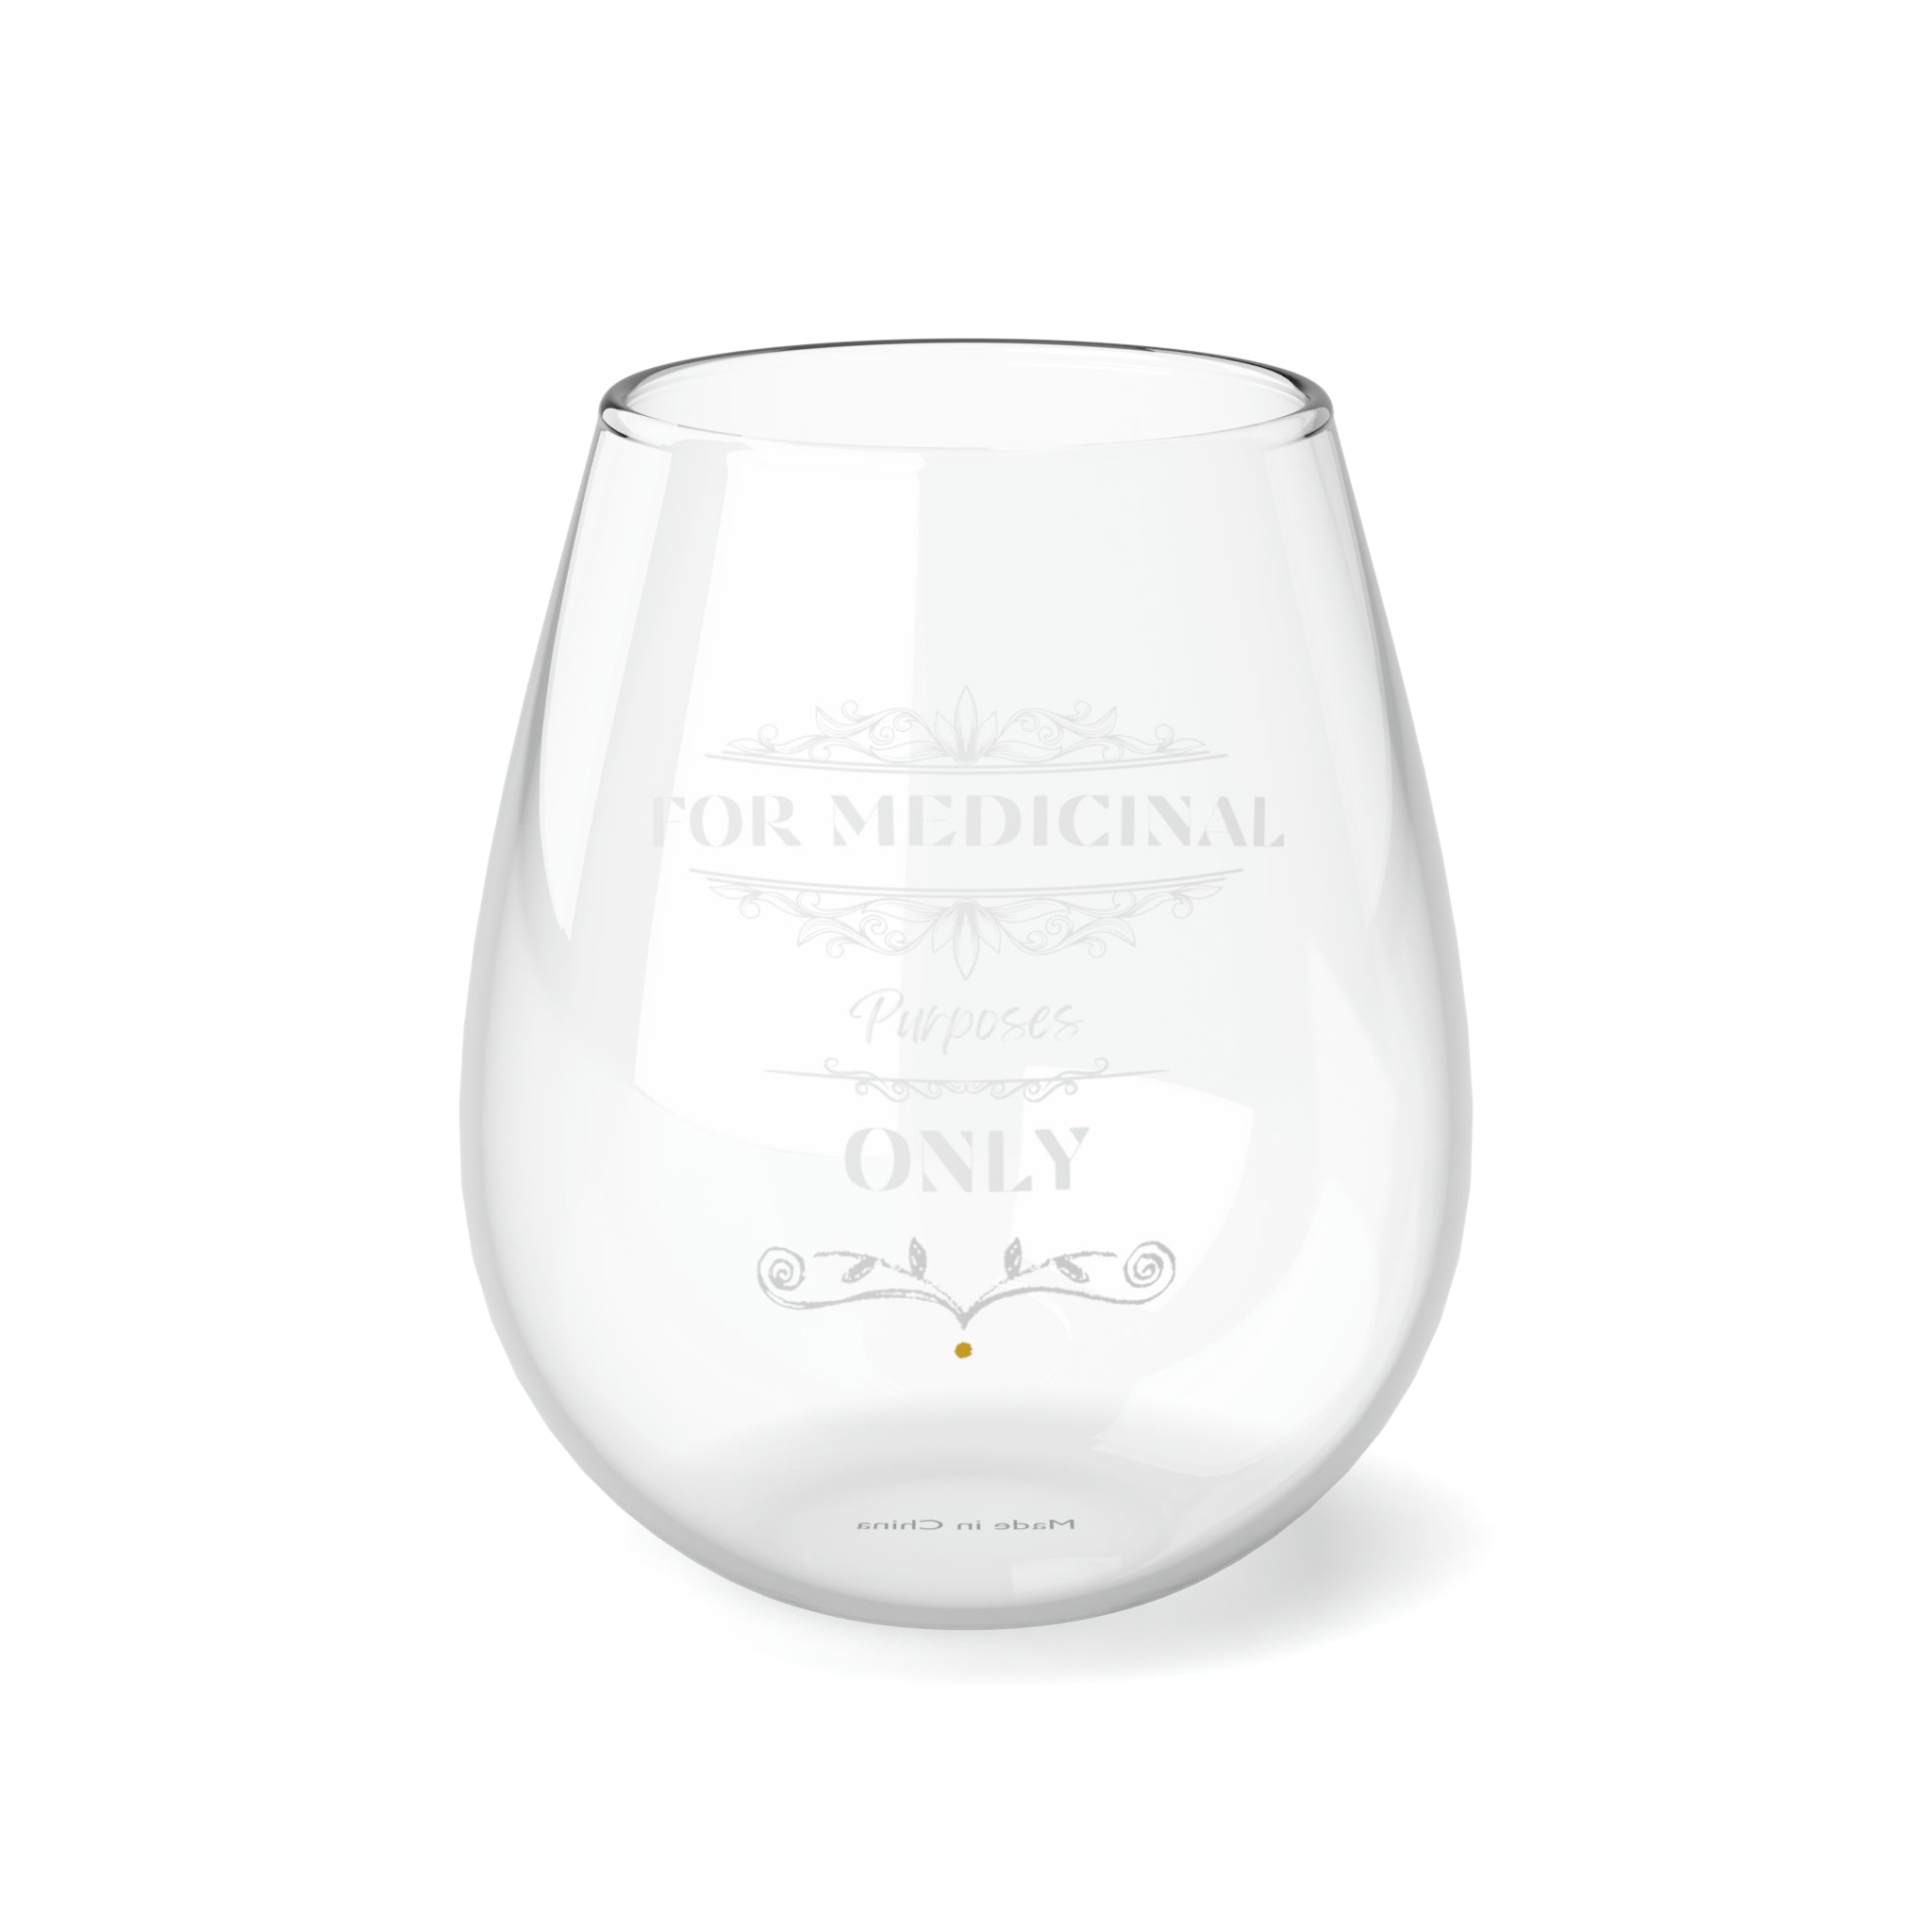 Medicinal Purposes - Stemless Wine Glass, 11.75oz